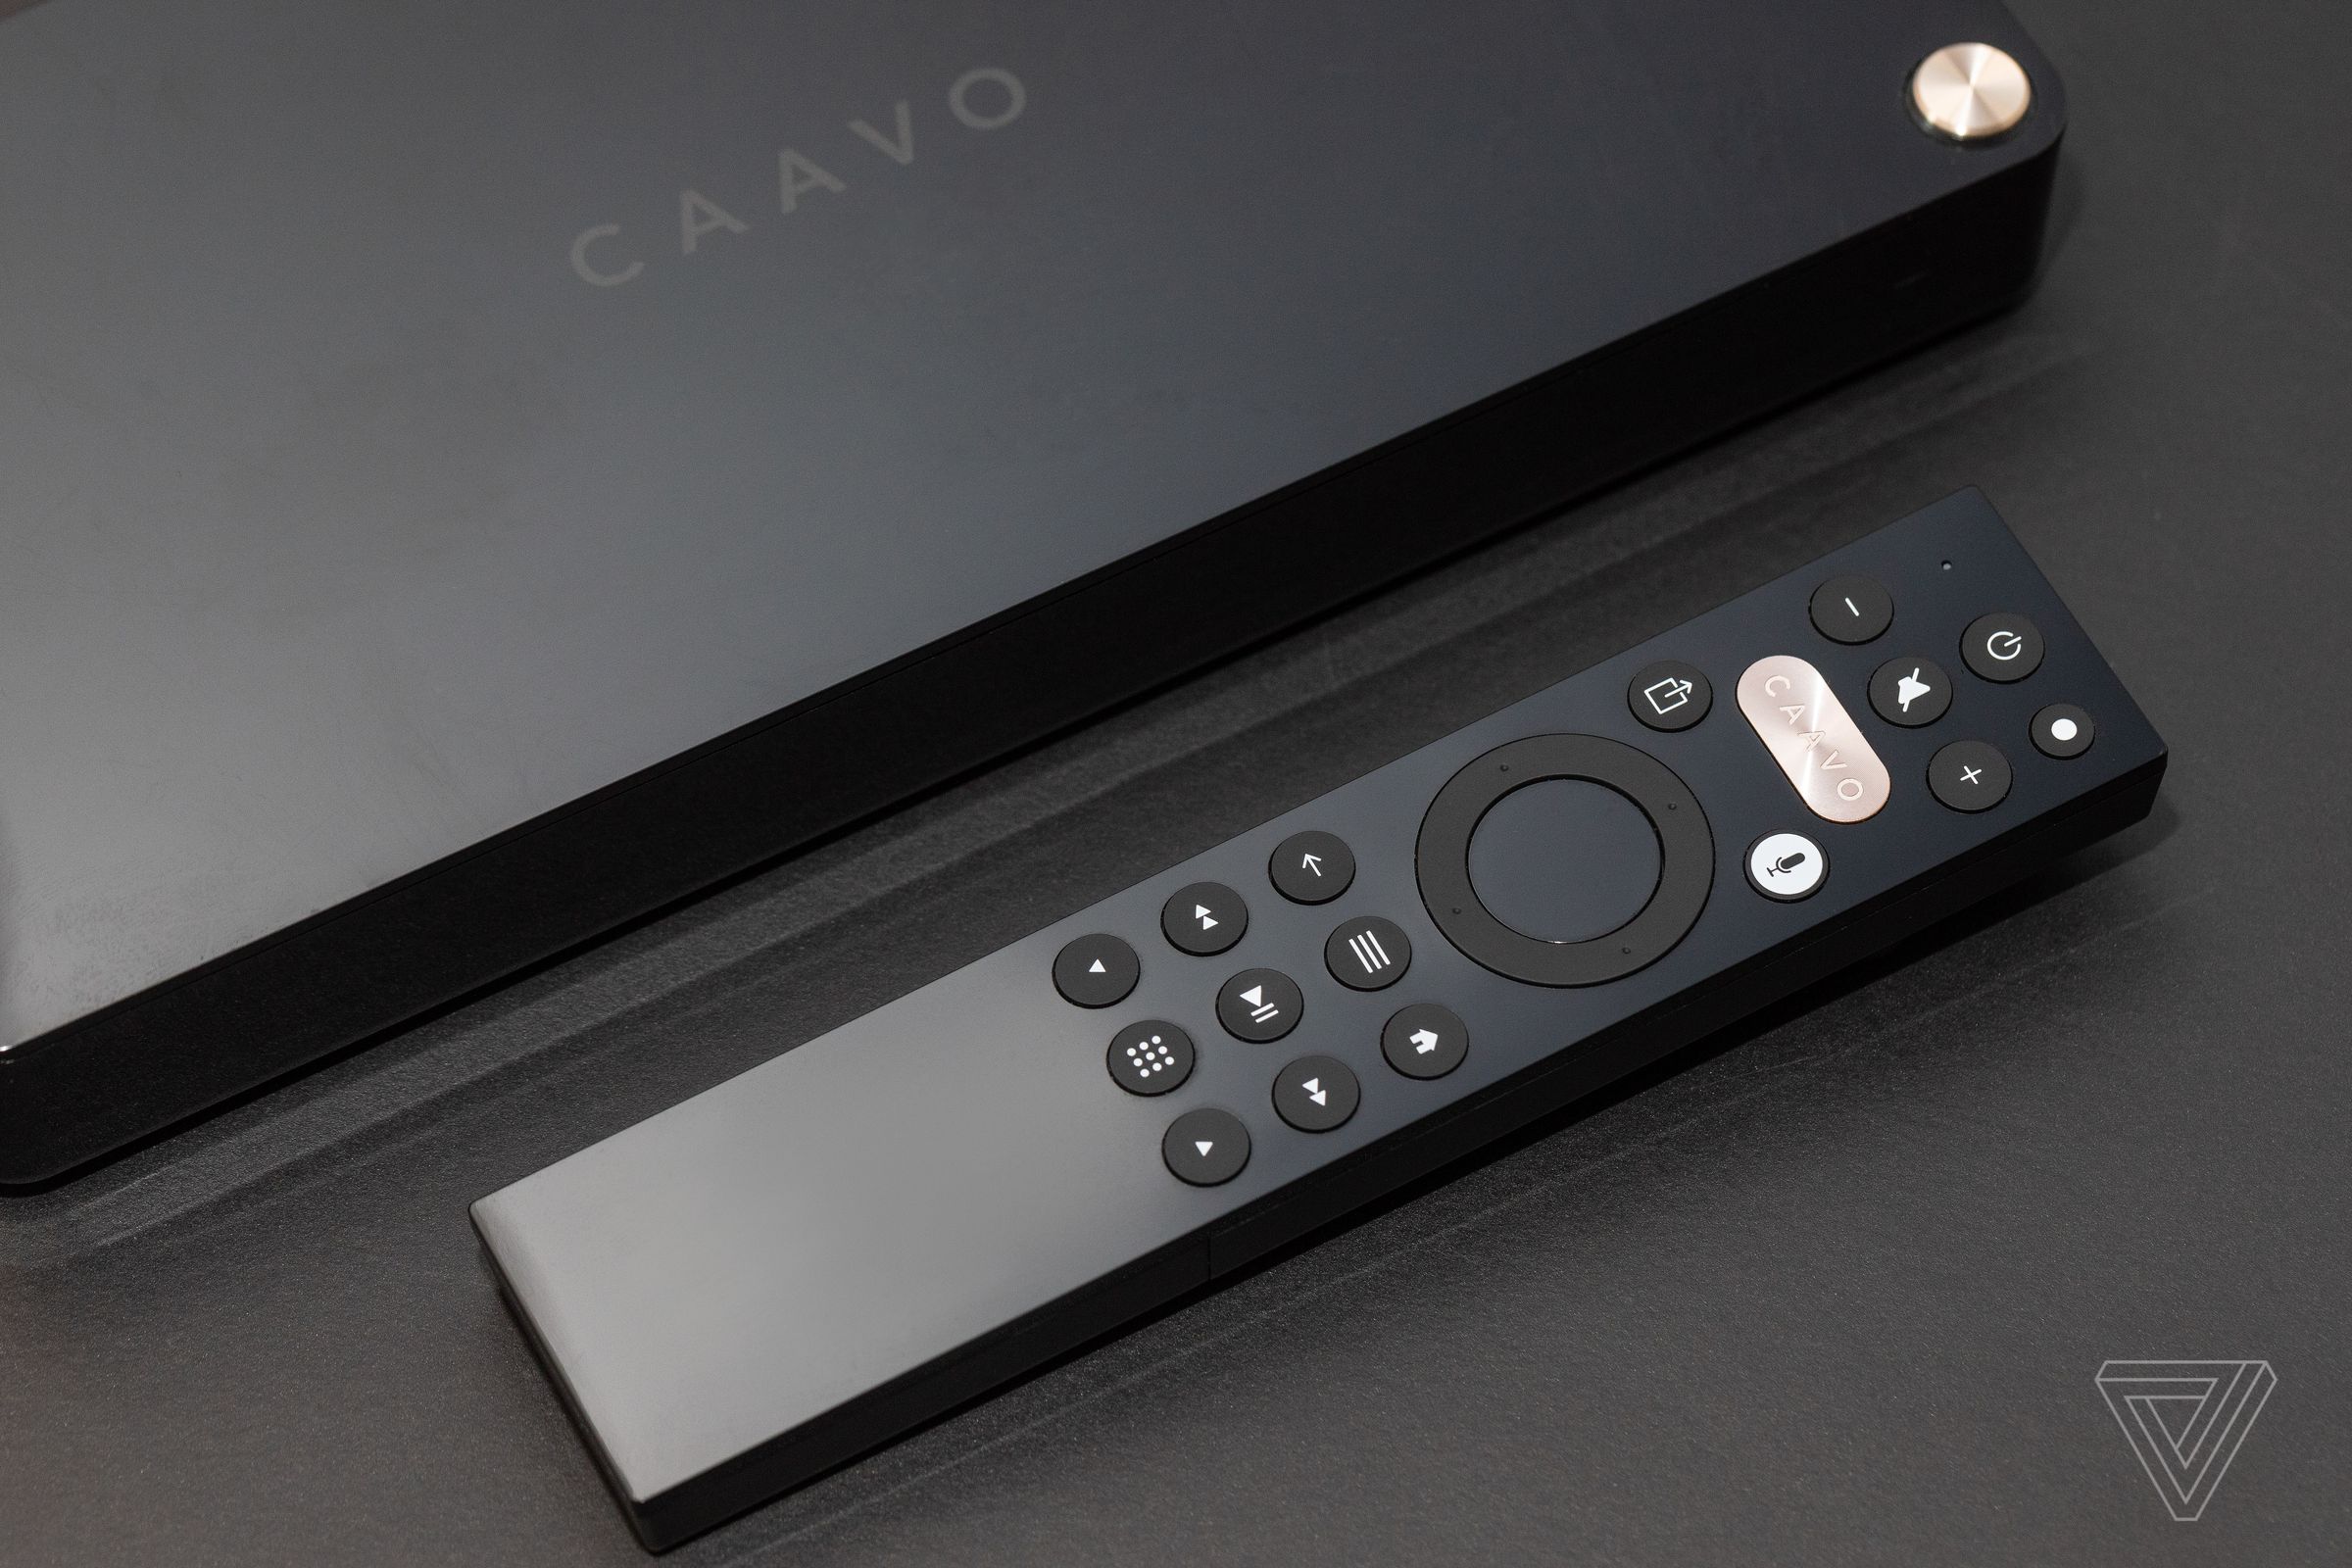 Caavo remote and box